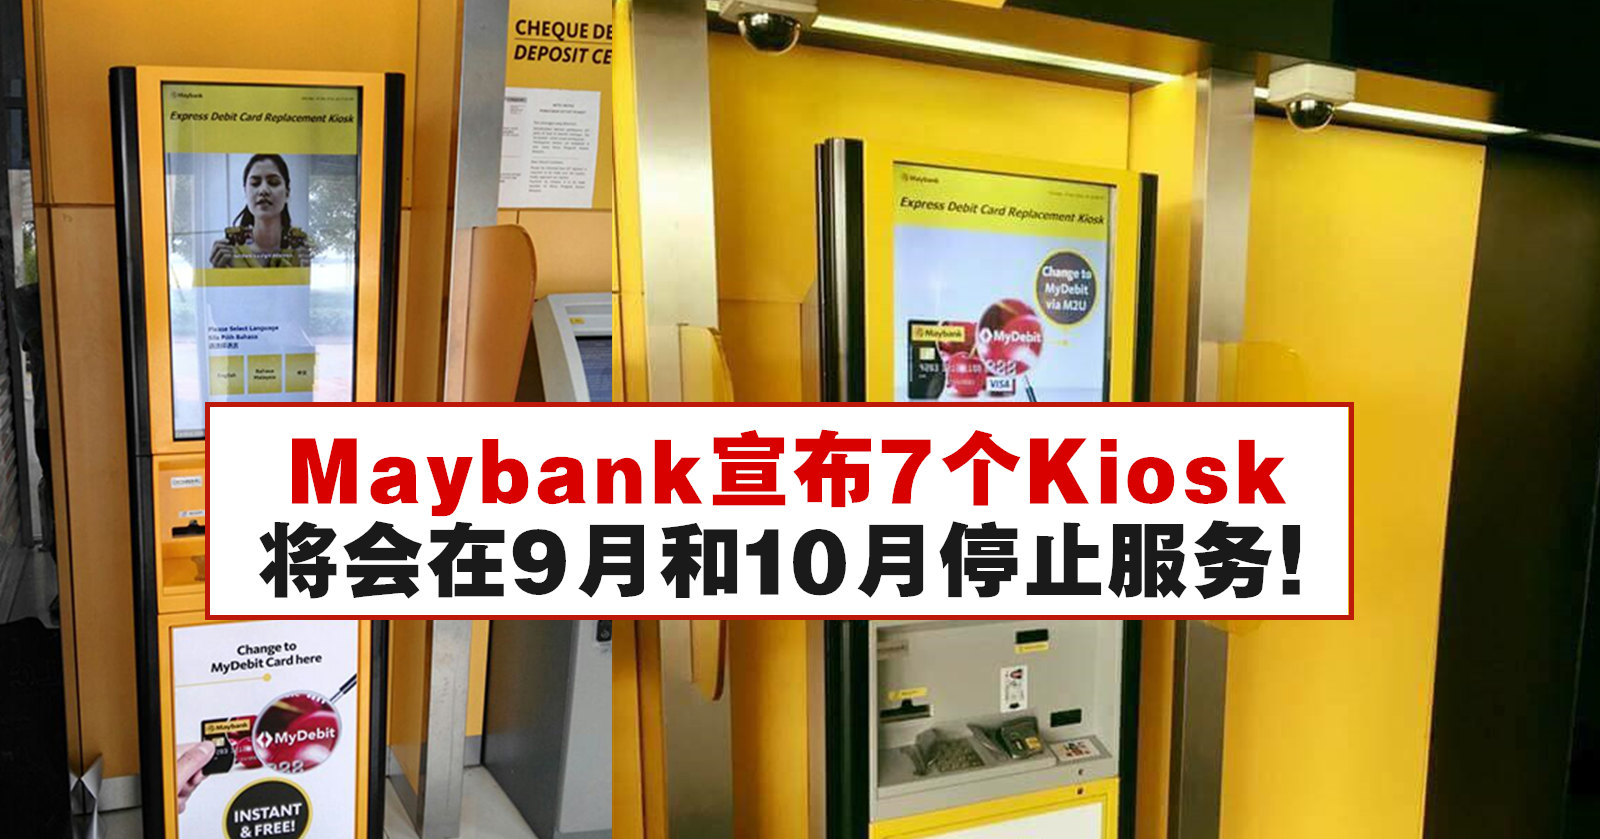 Replacement kiosk maybank debit card Maybank在11个地点设立更换Debit Card